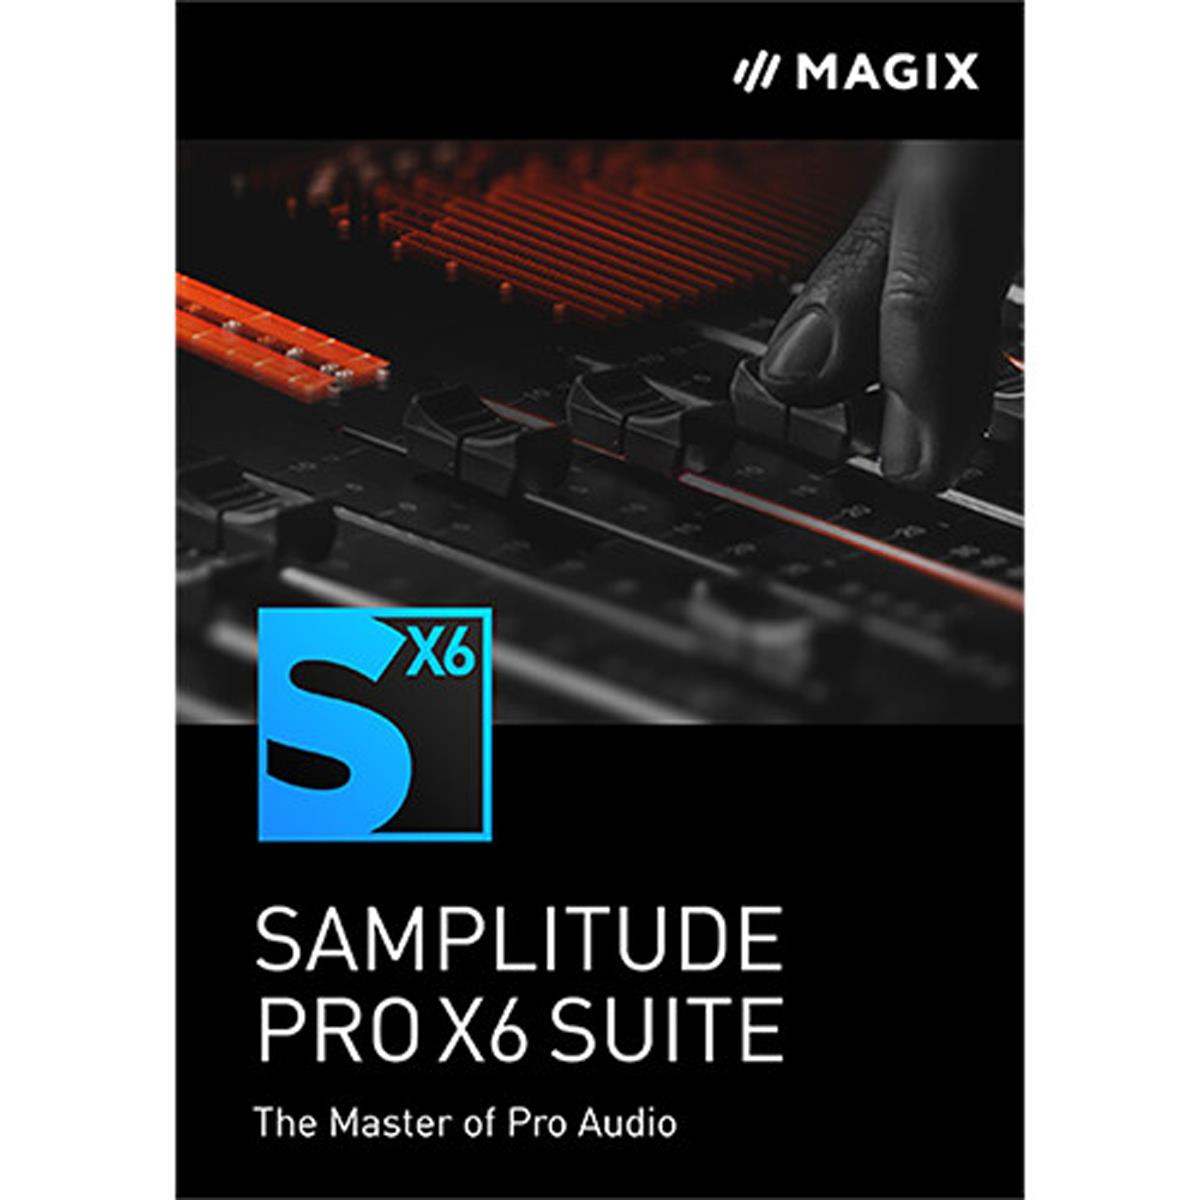 Magix Samplitude Pro X6 Suite Software, Download -  MGX-639191910210